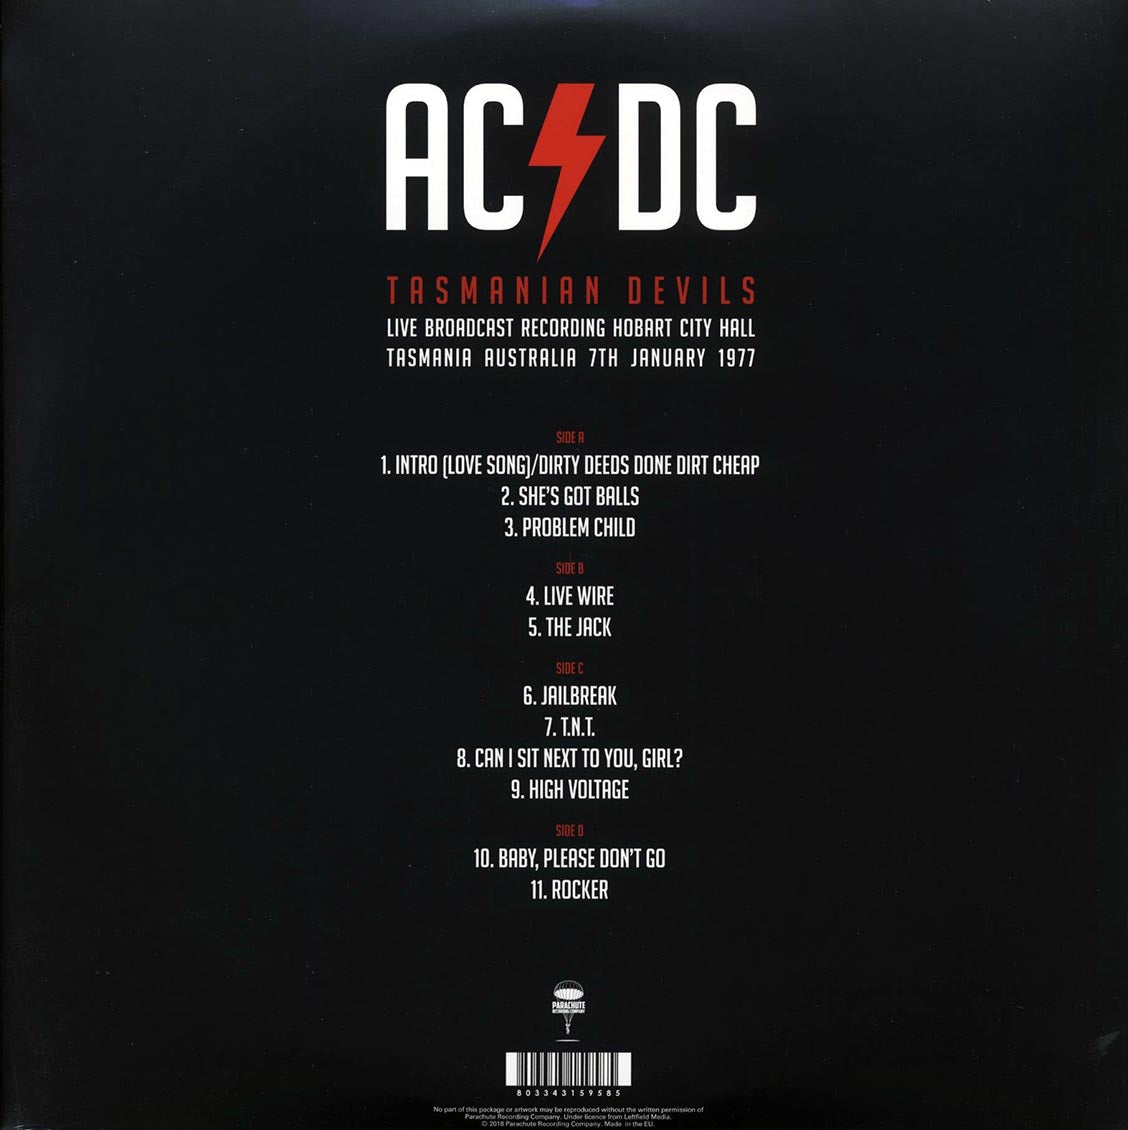 AC/DC - Tasmanian Devils: Live Broadcast Recording, Hobart City Hall, Tasmania, Australia, 7th January 1977 (2xLP) - Vinyl LP, LP